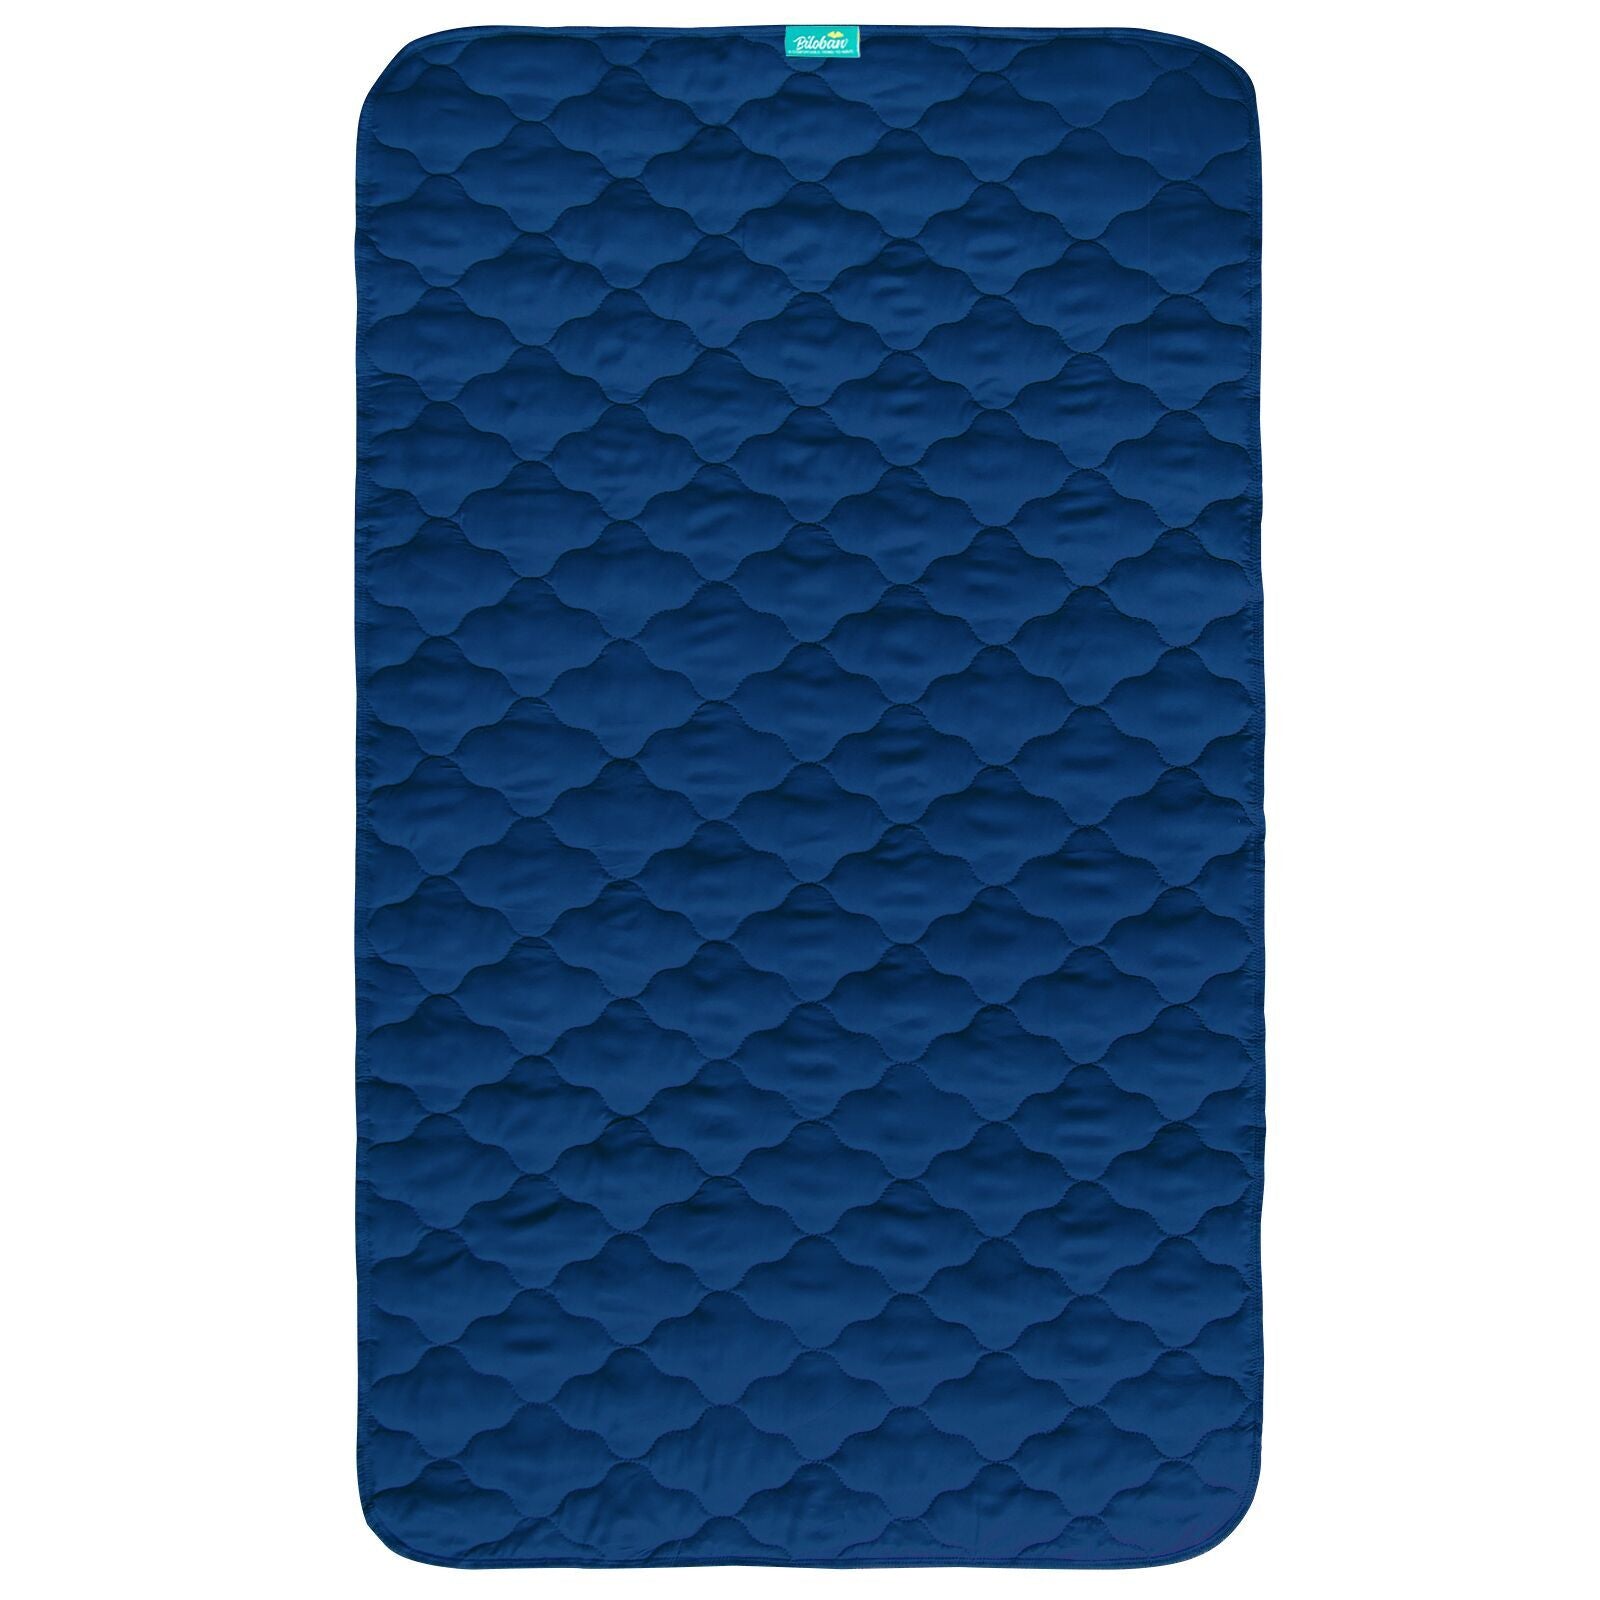 Waterproof Crib Mattress Protector Pad | Bed Pad Mat - 52" x 28", Anti Slip & Durable, Navy - Biloban Online Store